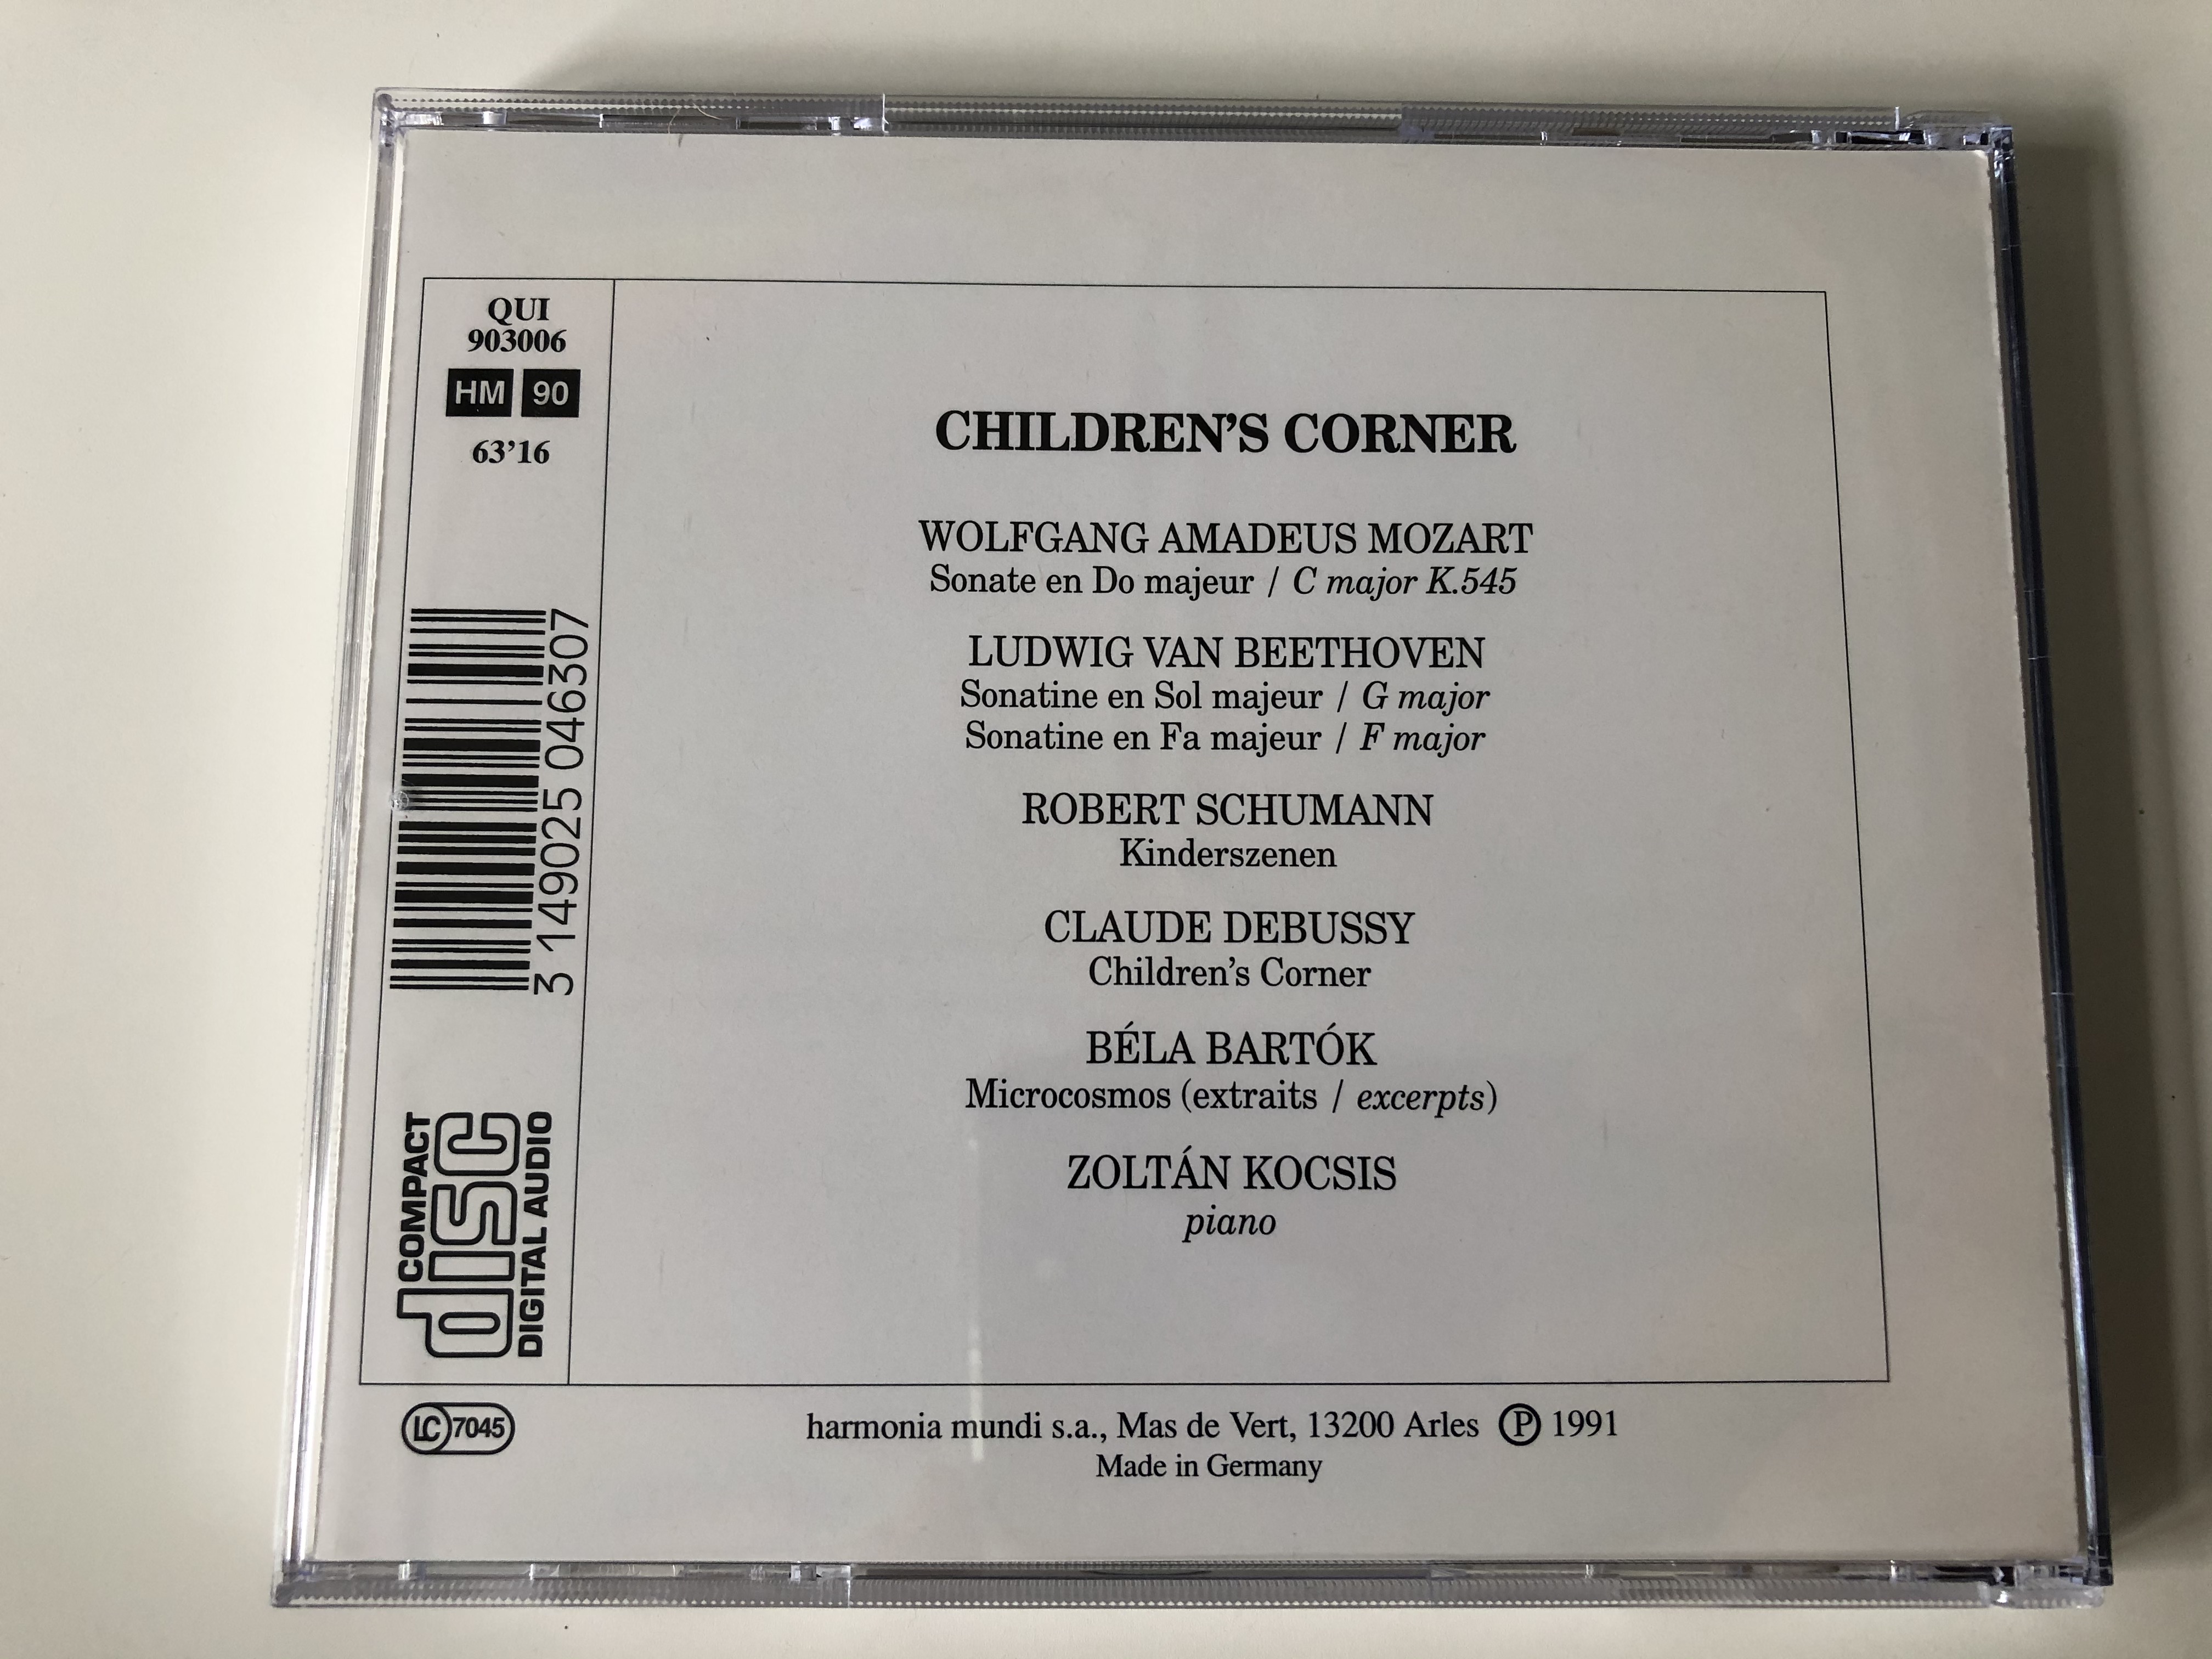 children-s-corner-mozart-beethoven-schumann-debussy-bartok-zoltan-kocsis-piano-quintana-audio-cd-1991-qui-903006-9-.jpg